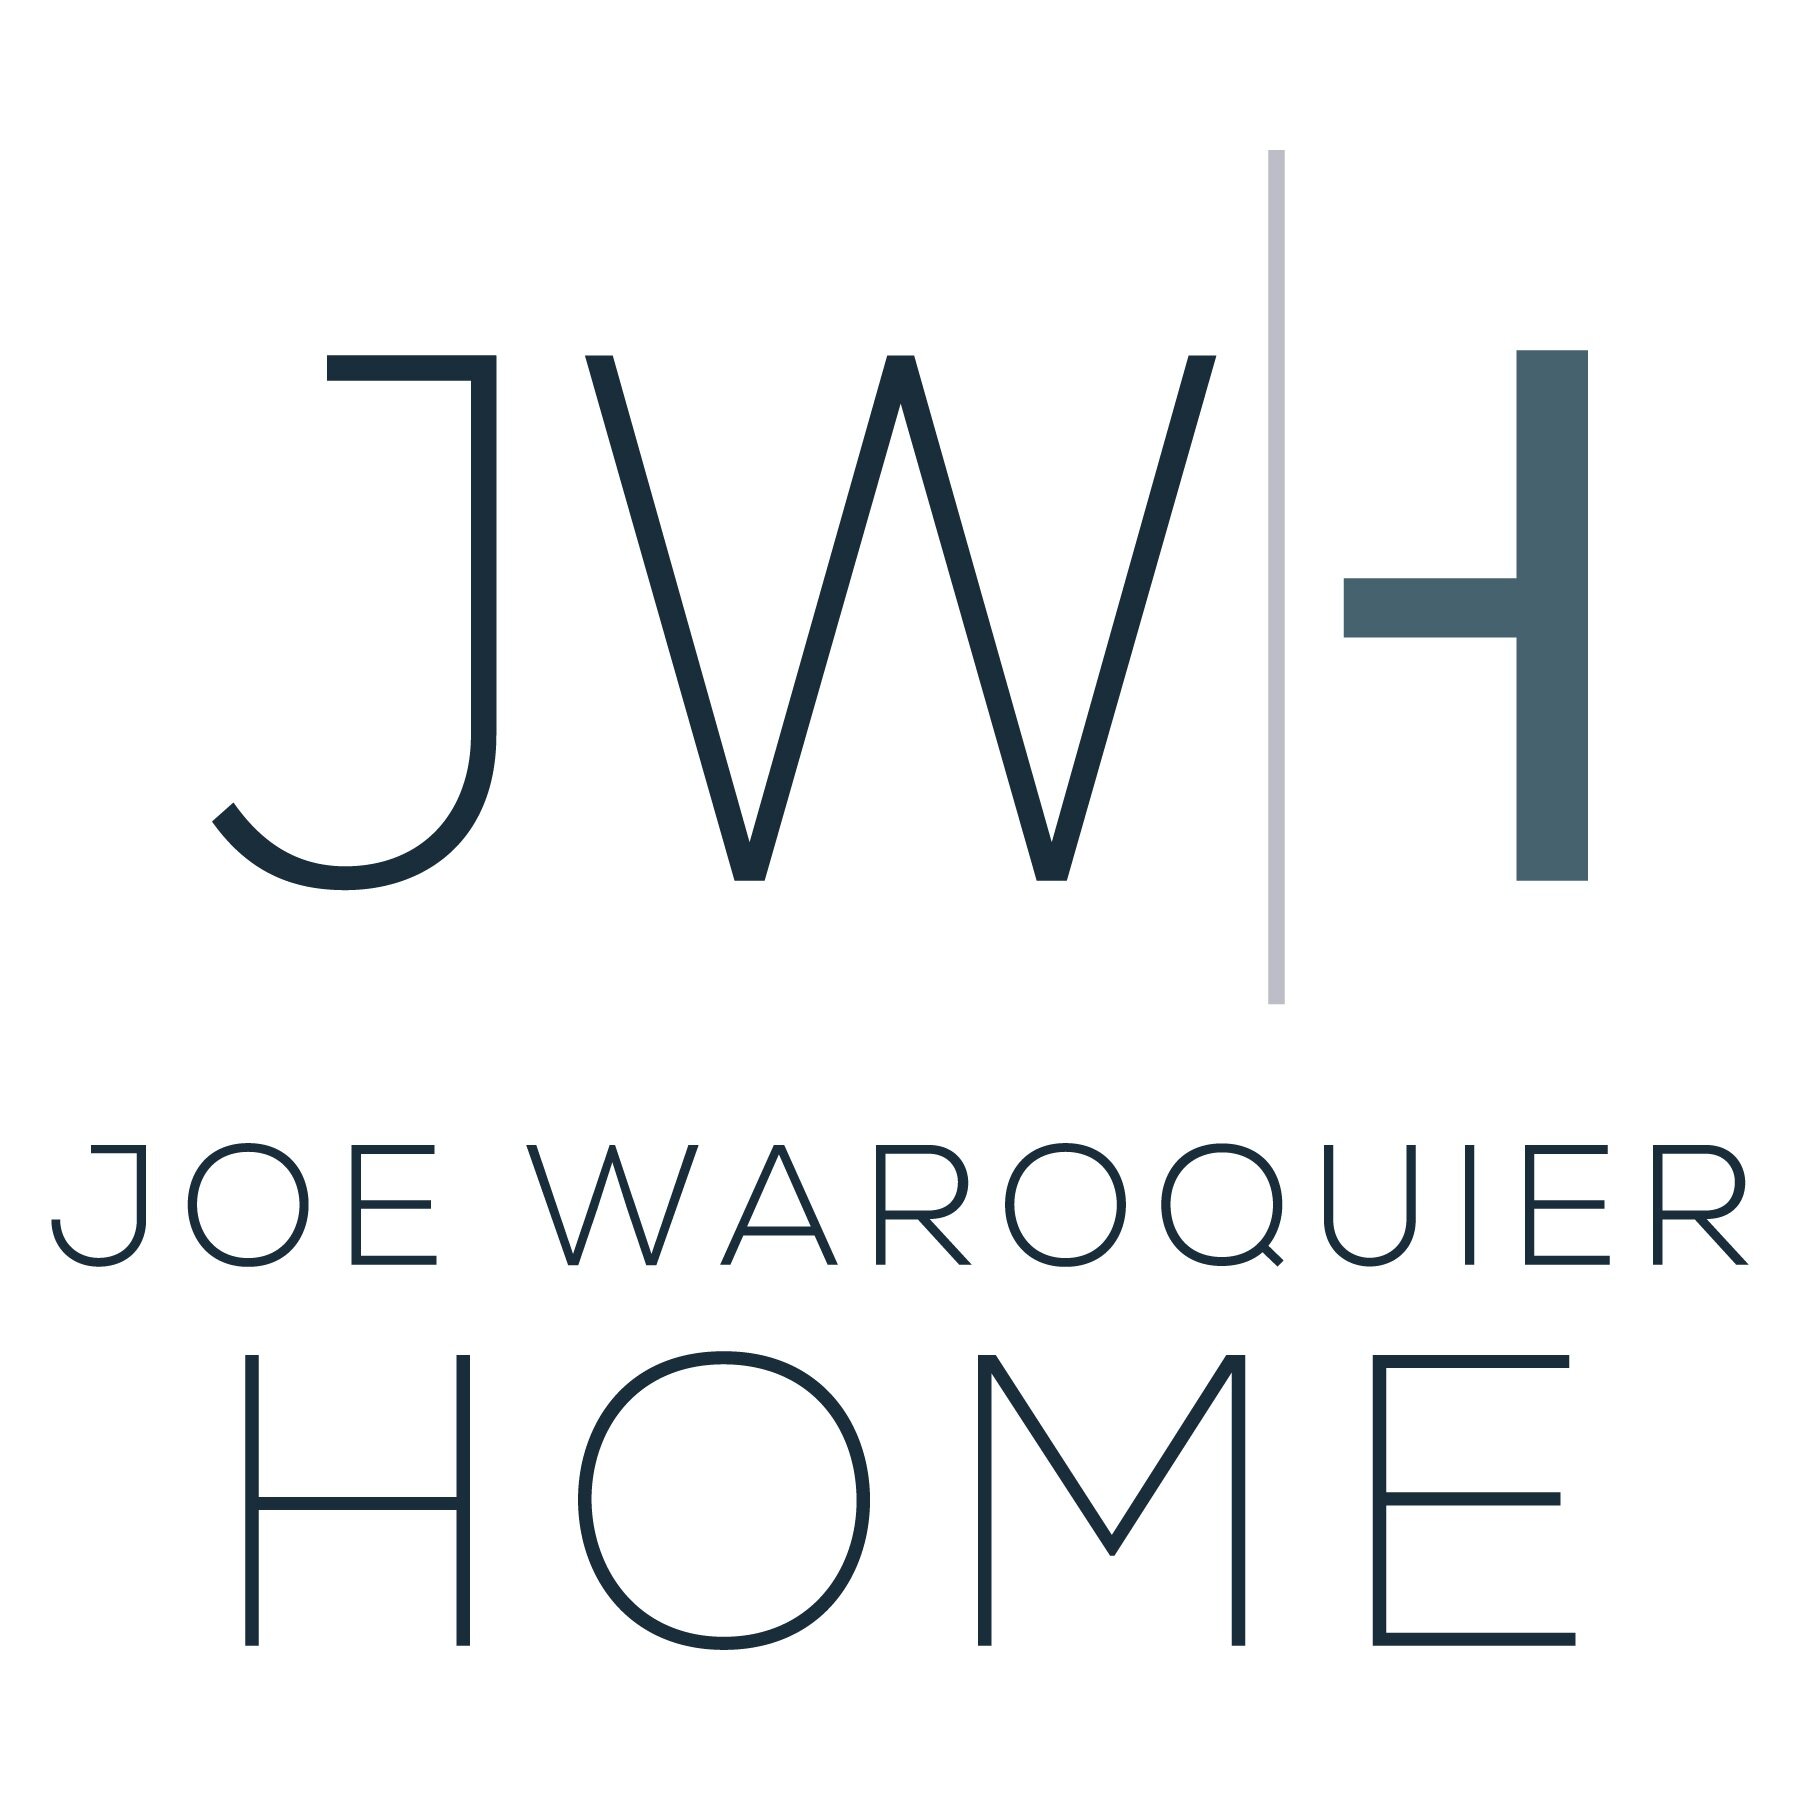 Joe Waroquier HOME